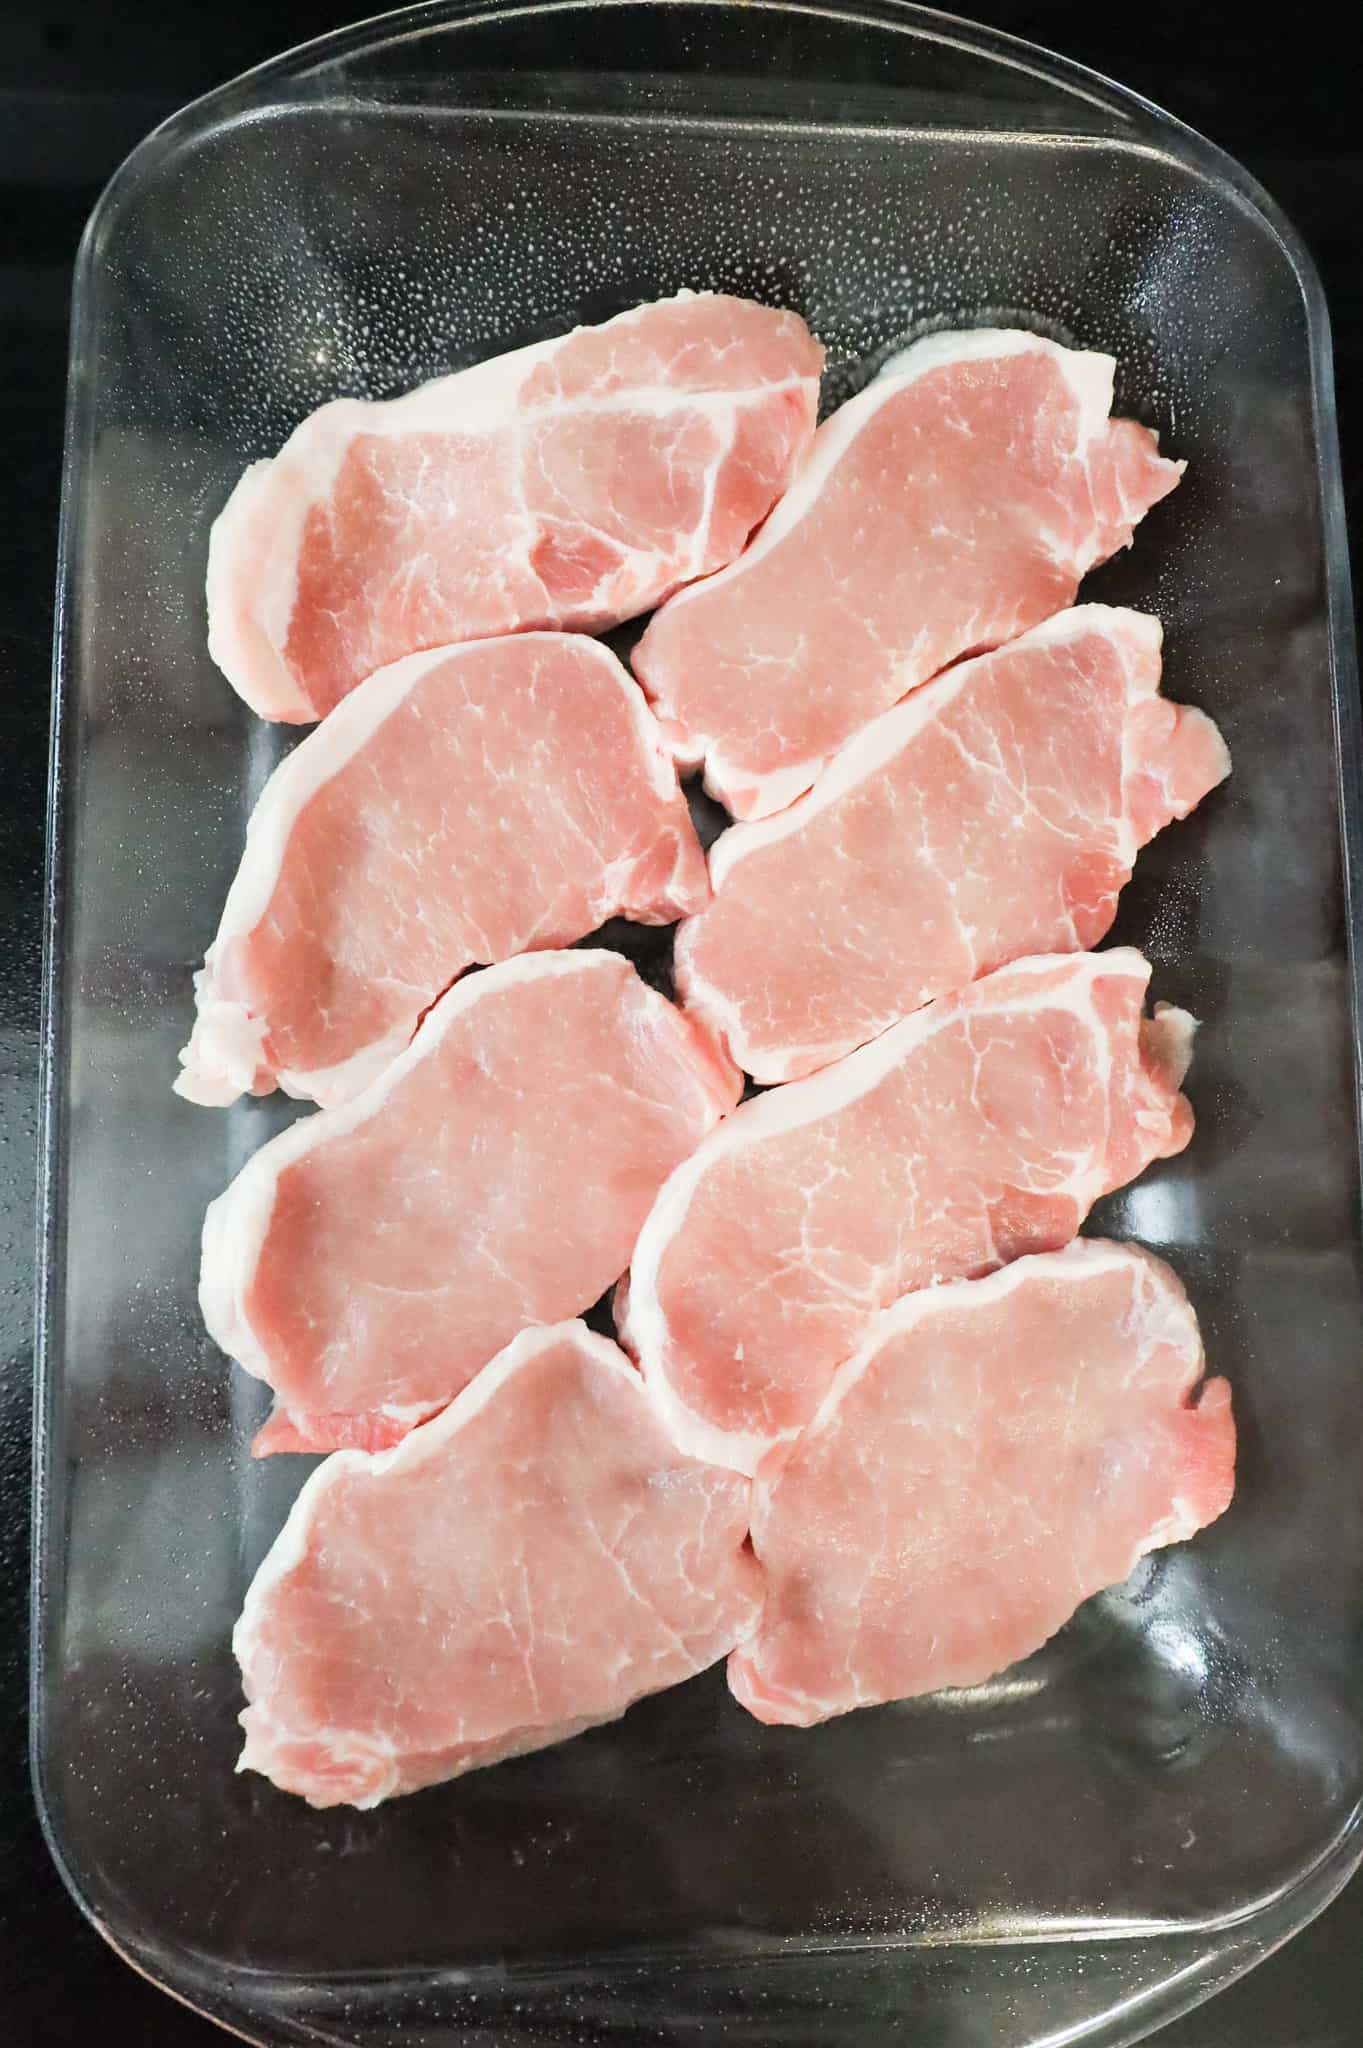 raw pork chops in a baking dish